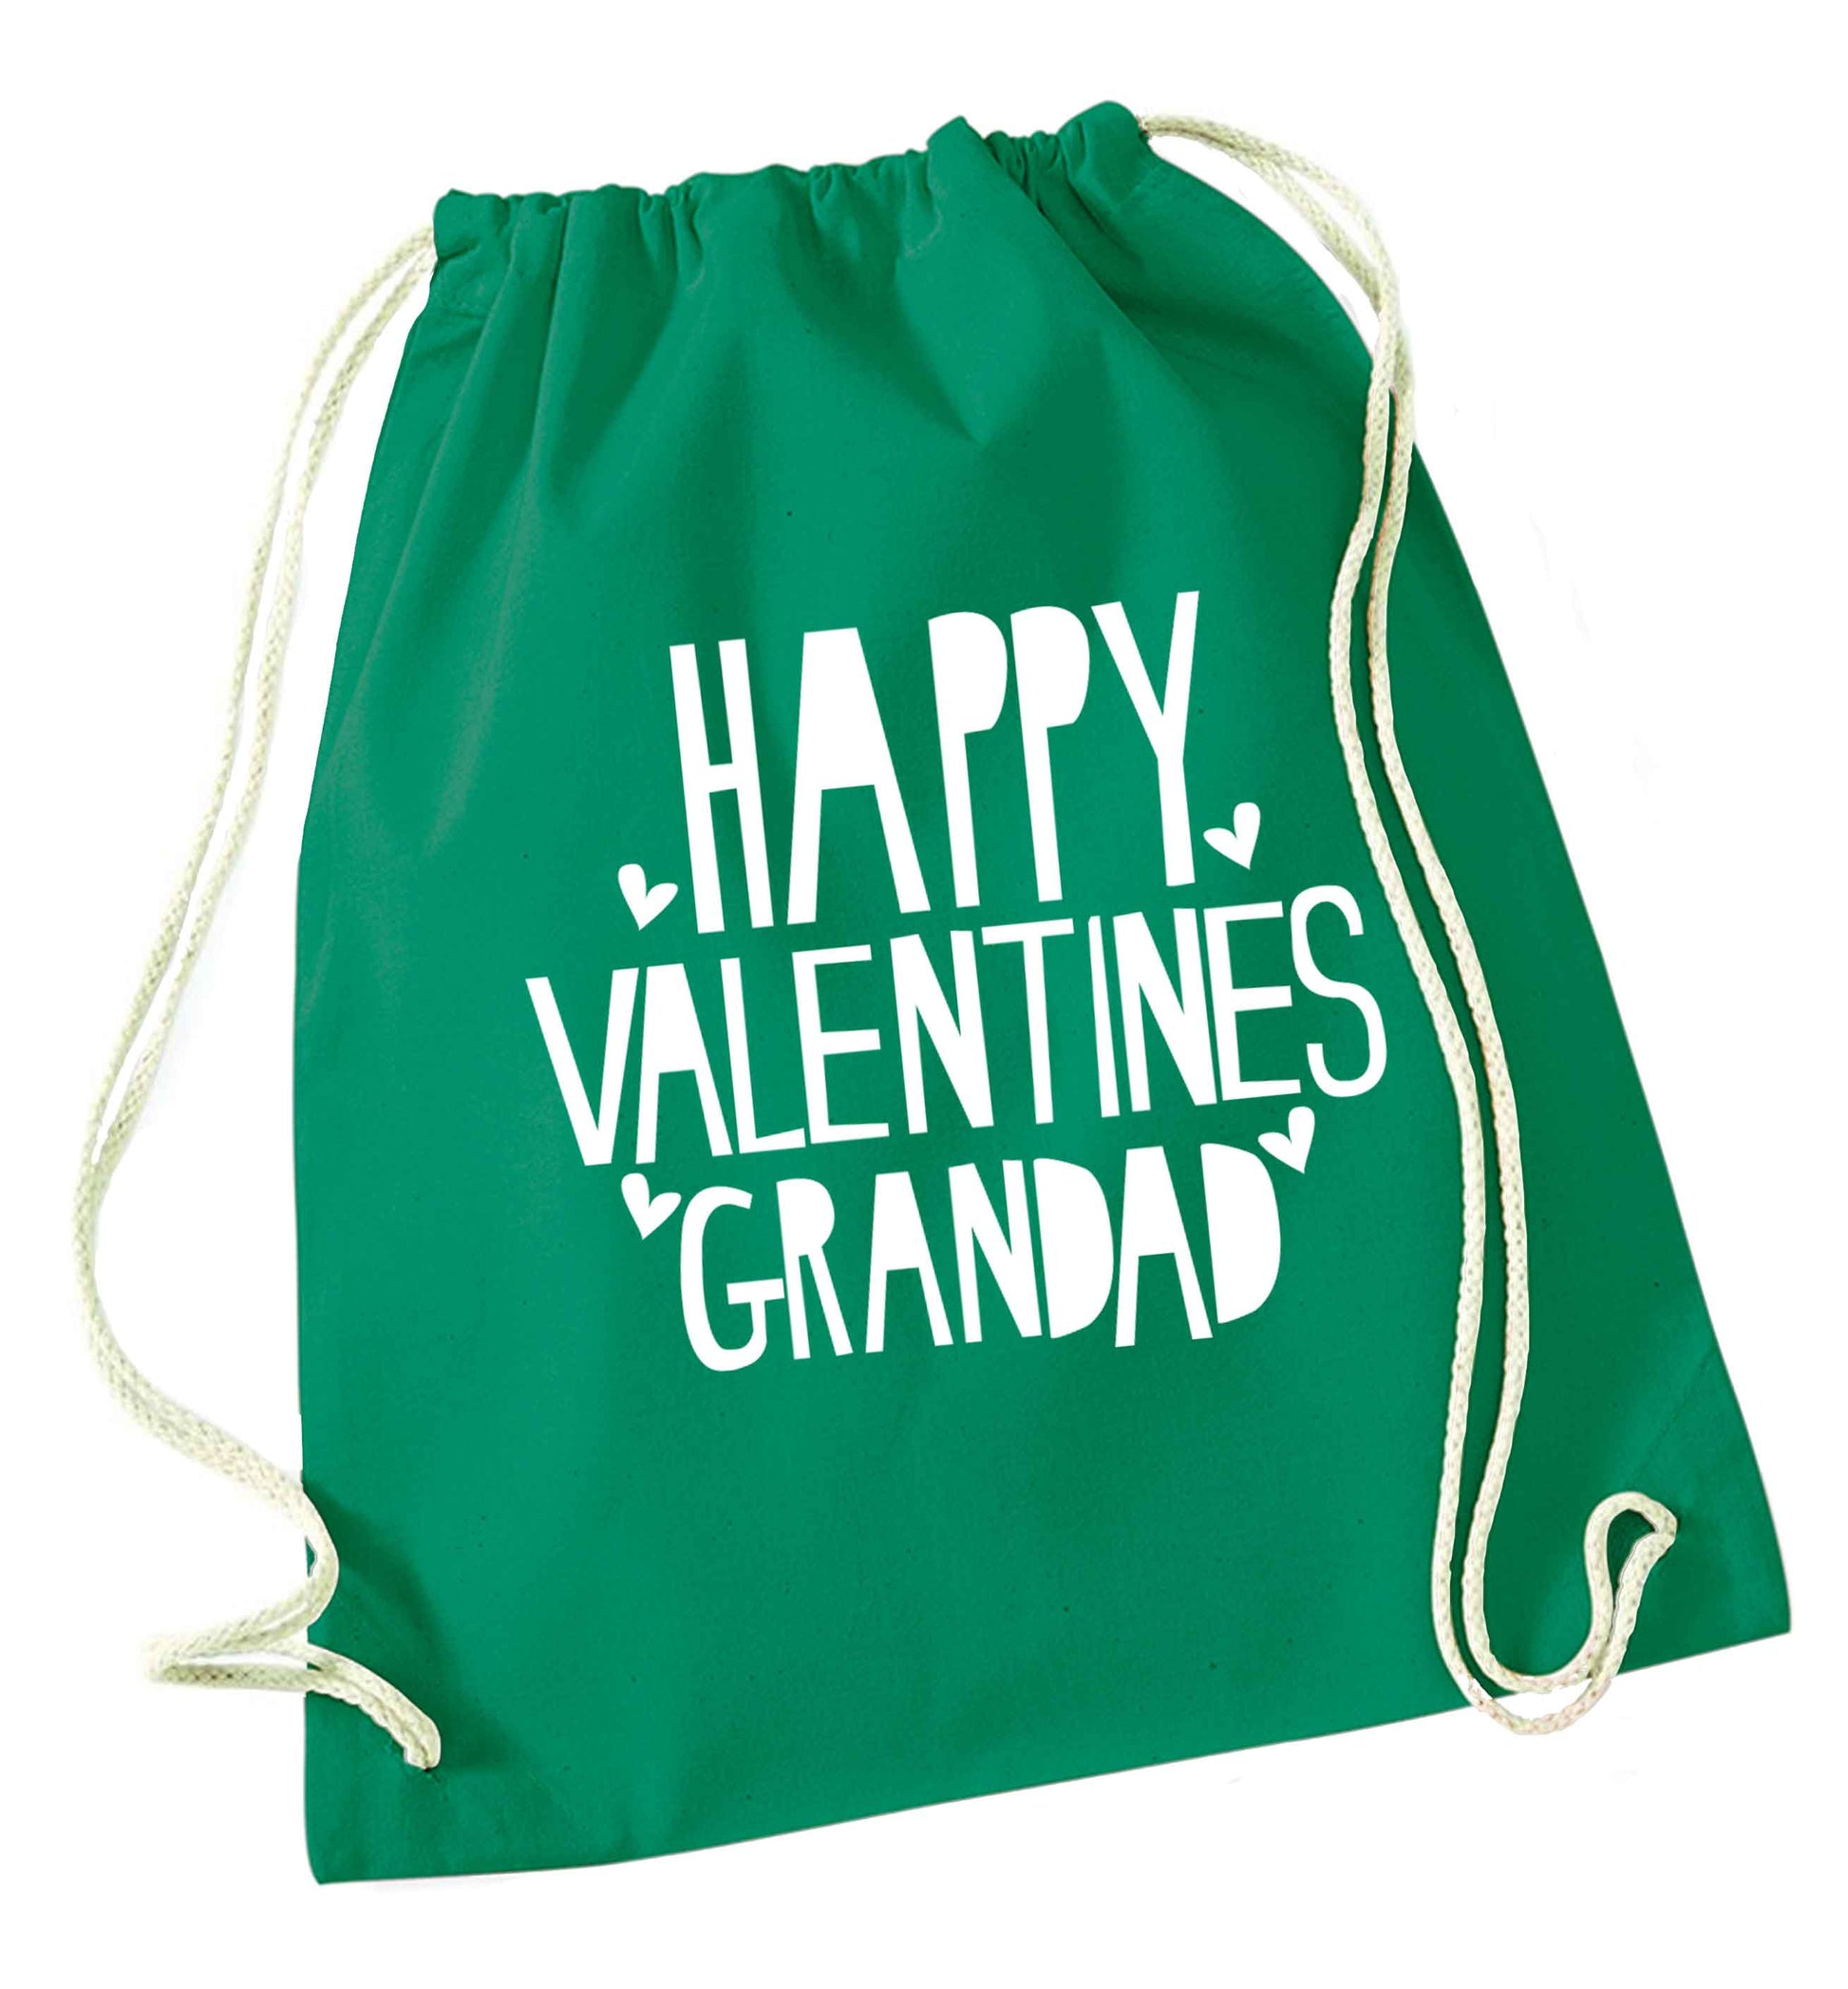 Happy valentines grandad green drawstring bag